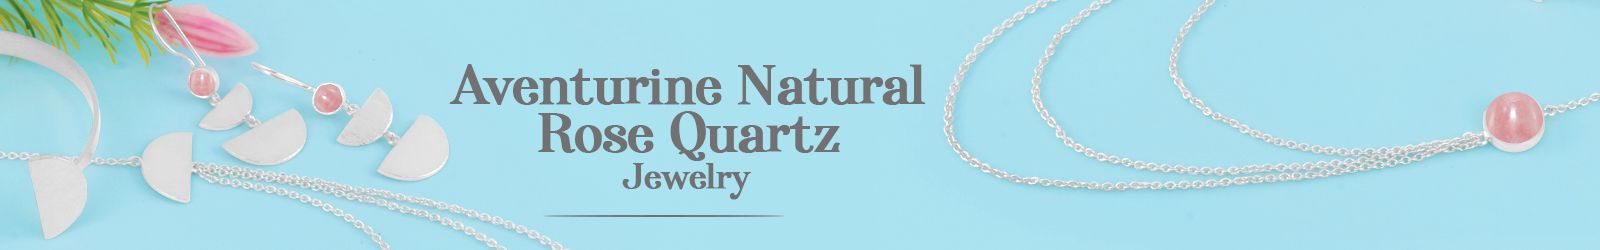 Silver Aventurine Natural  Rose Quartz Jewelry Wholesale Supplier